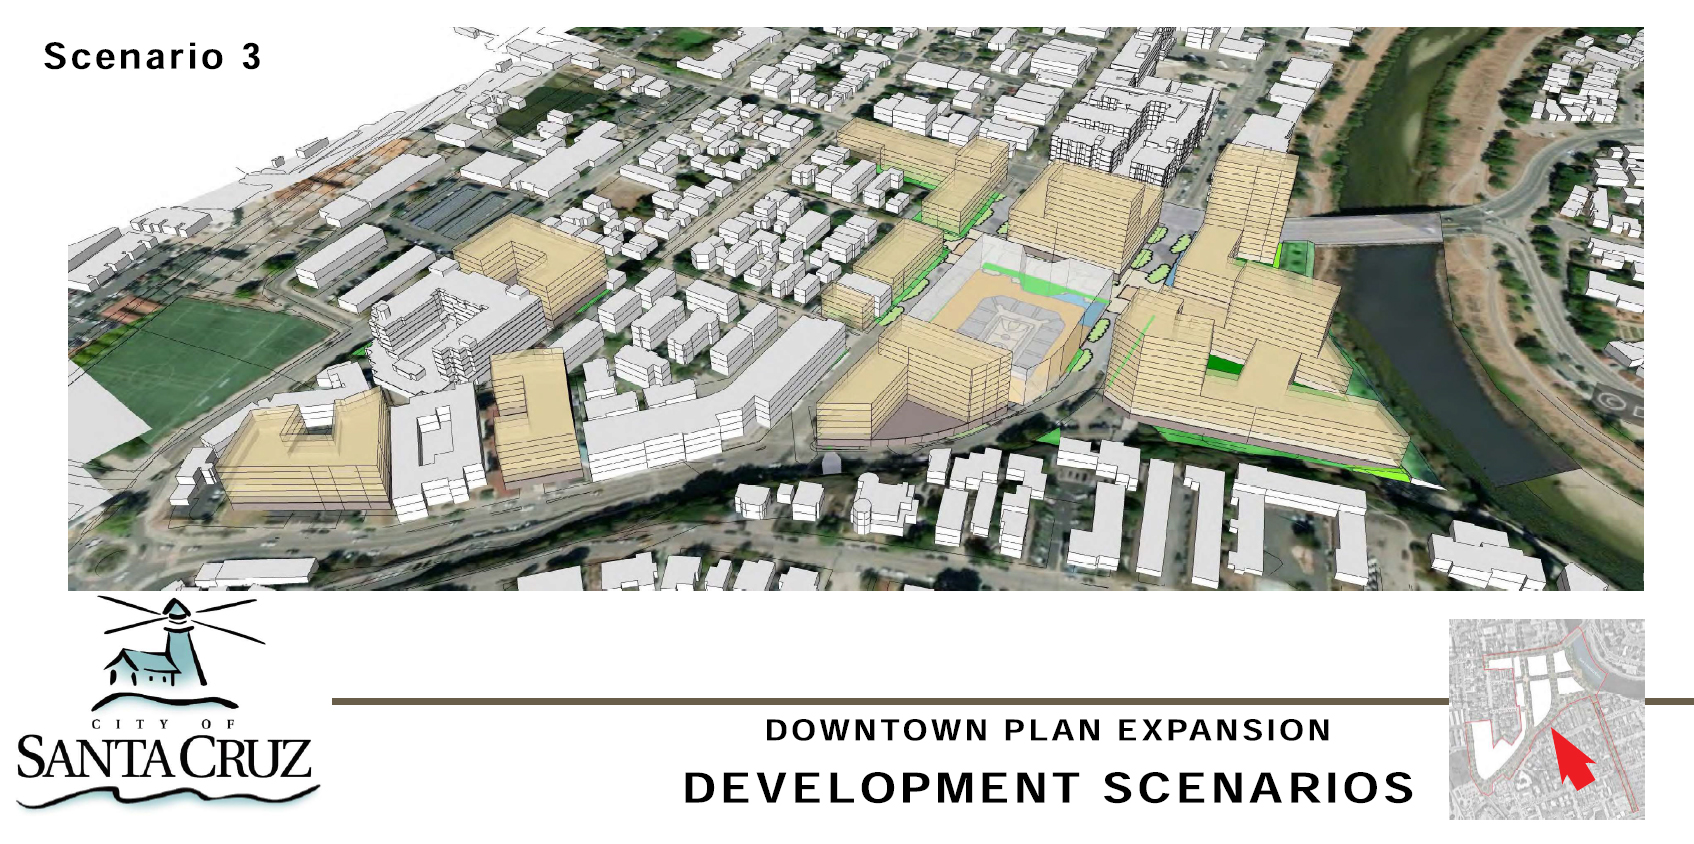 Santa Cruz Downtown expansion plan scaled back - Santa Cruz Local